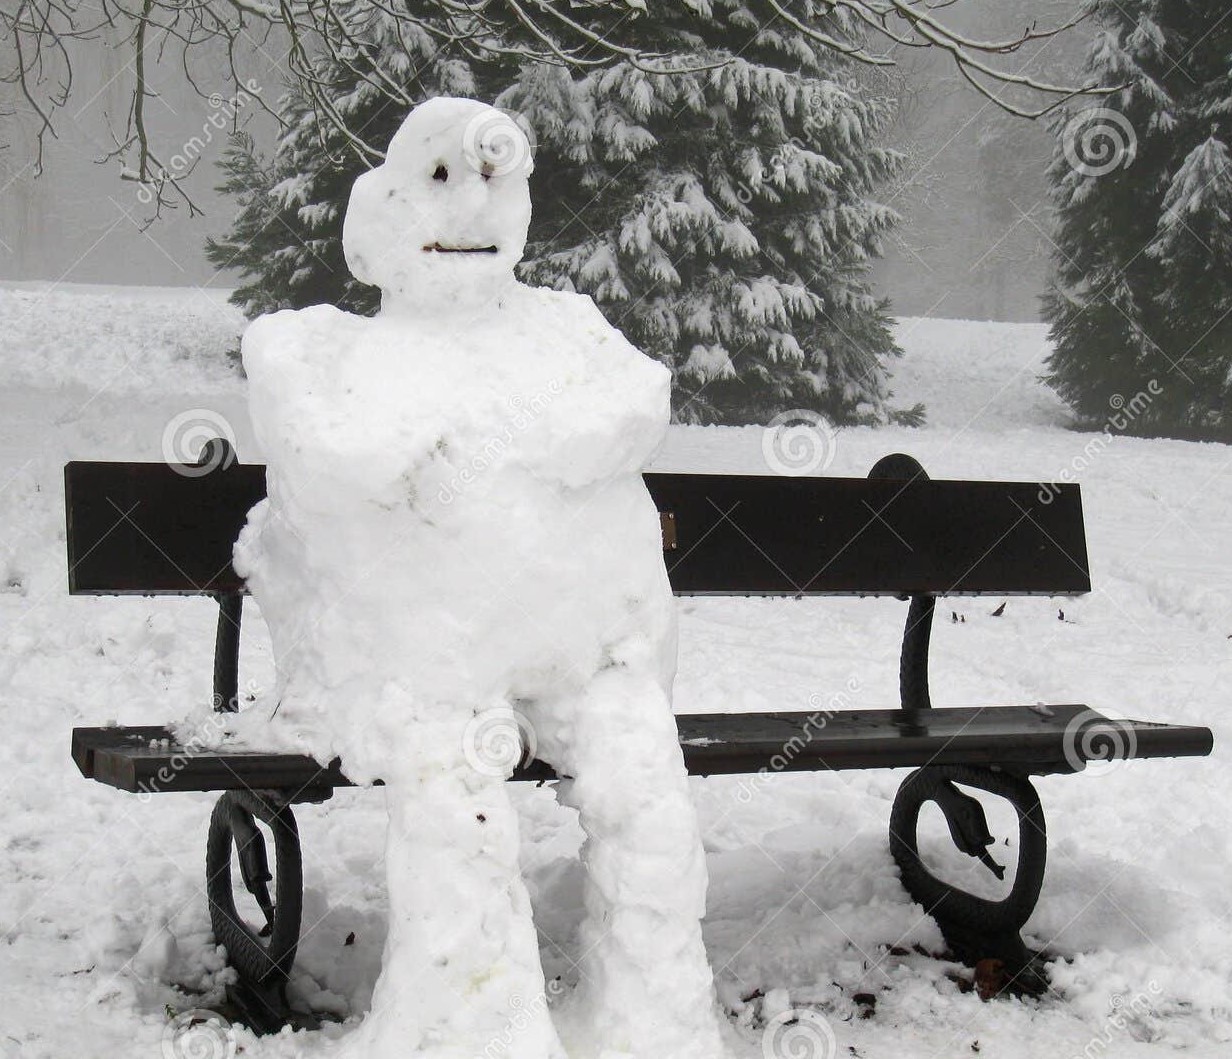 A Frosty Friend
(Sean The Snowman)